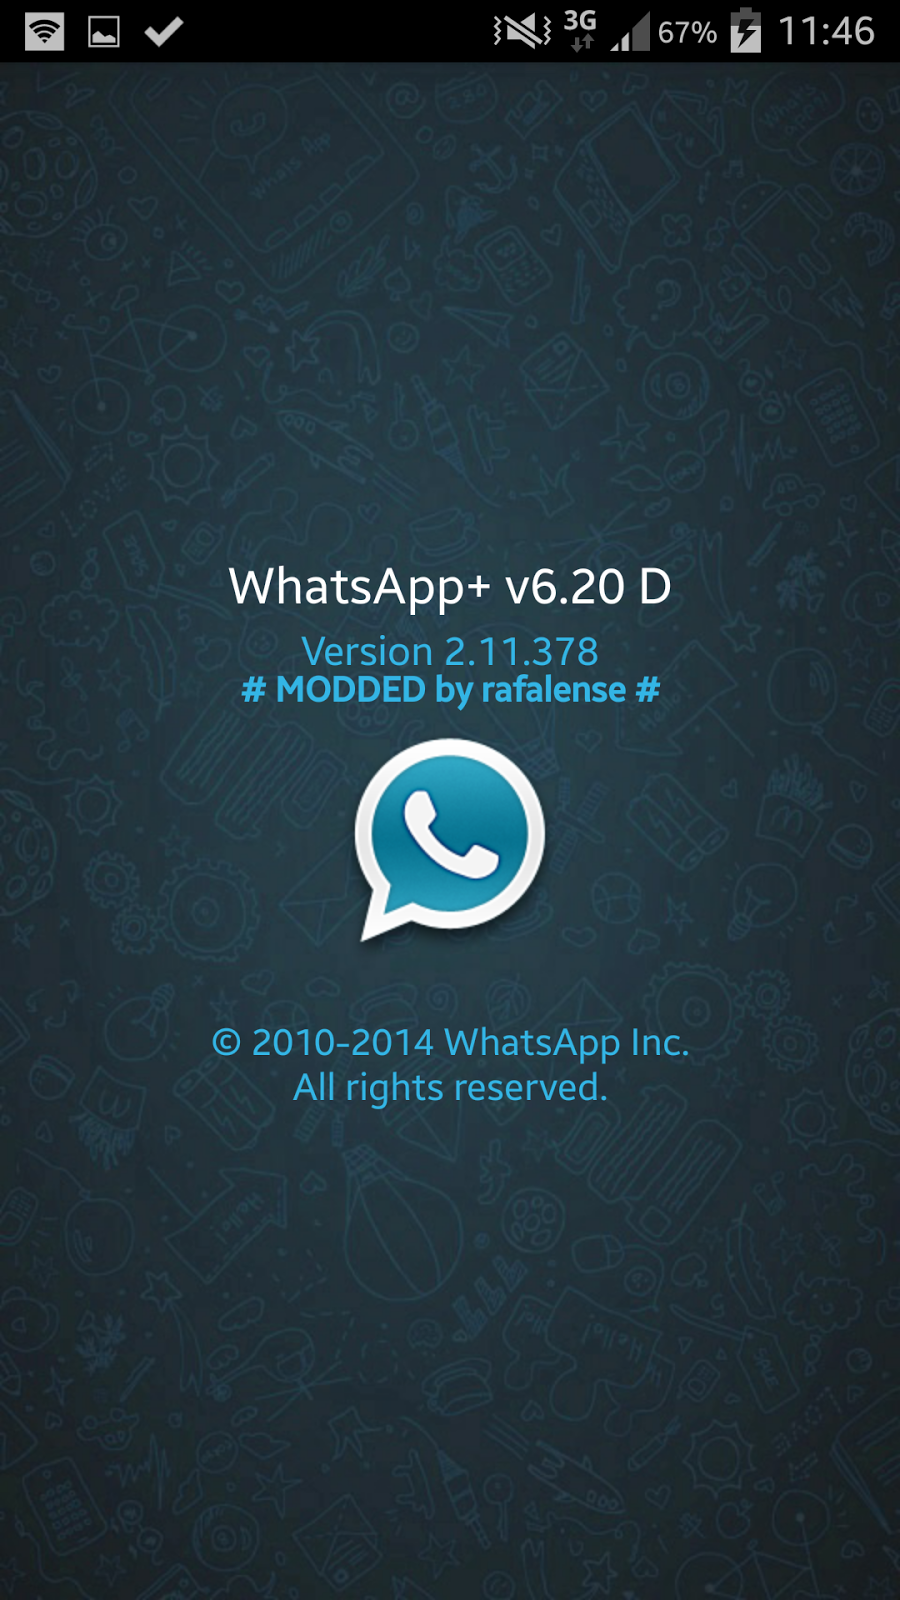 whatsapp customer care: Download Whatsapp Plus